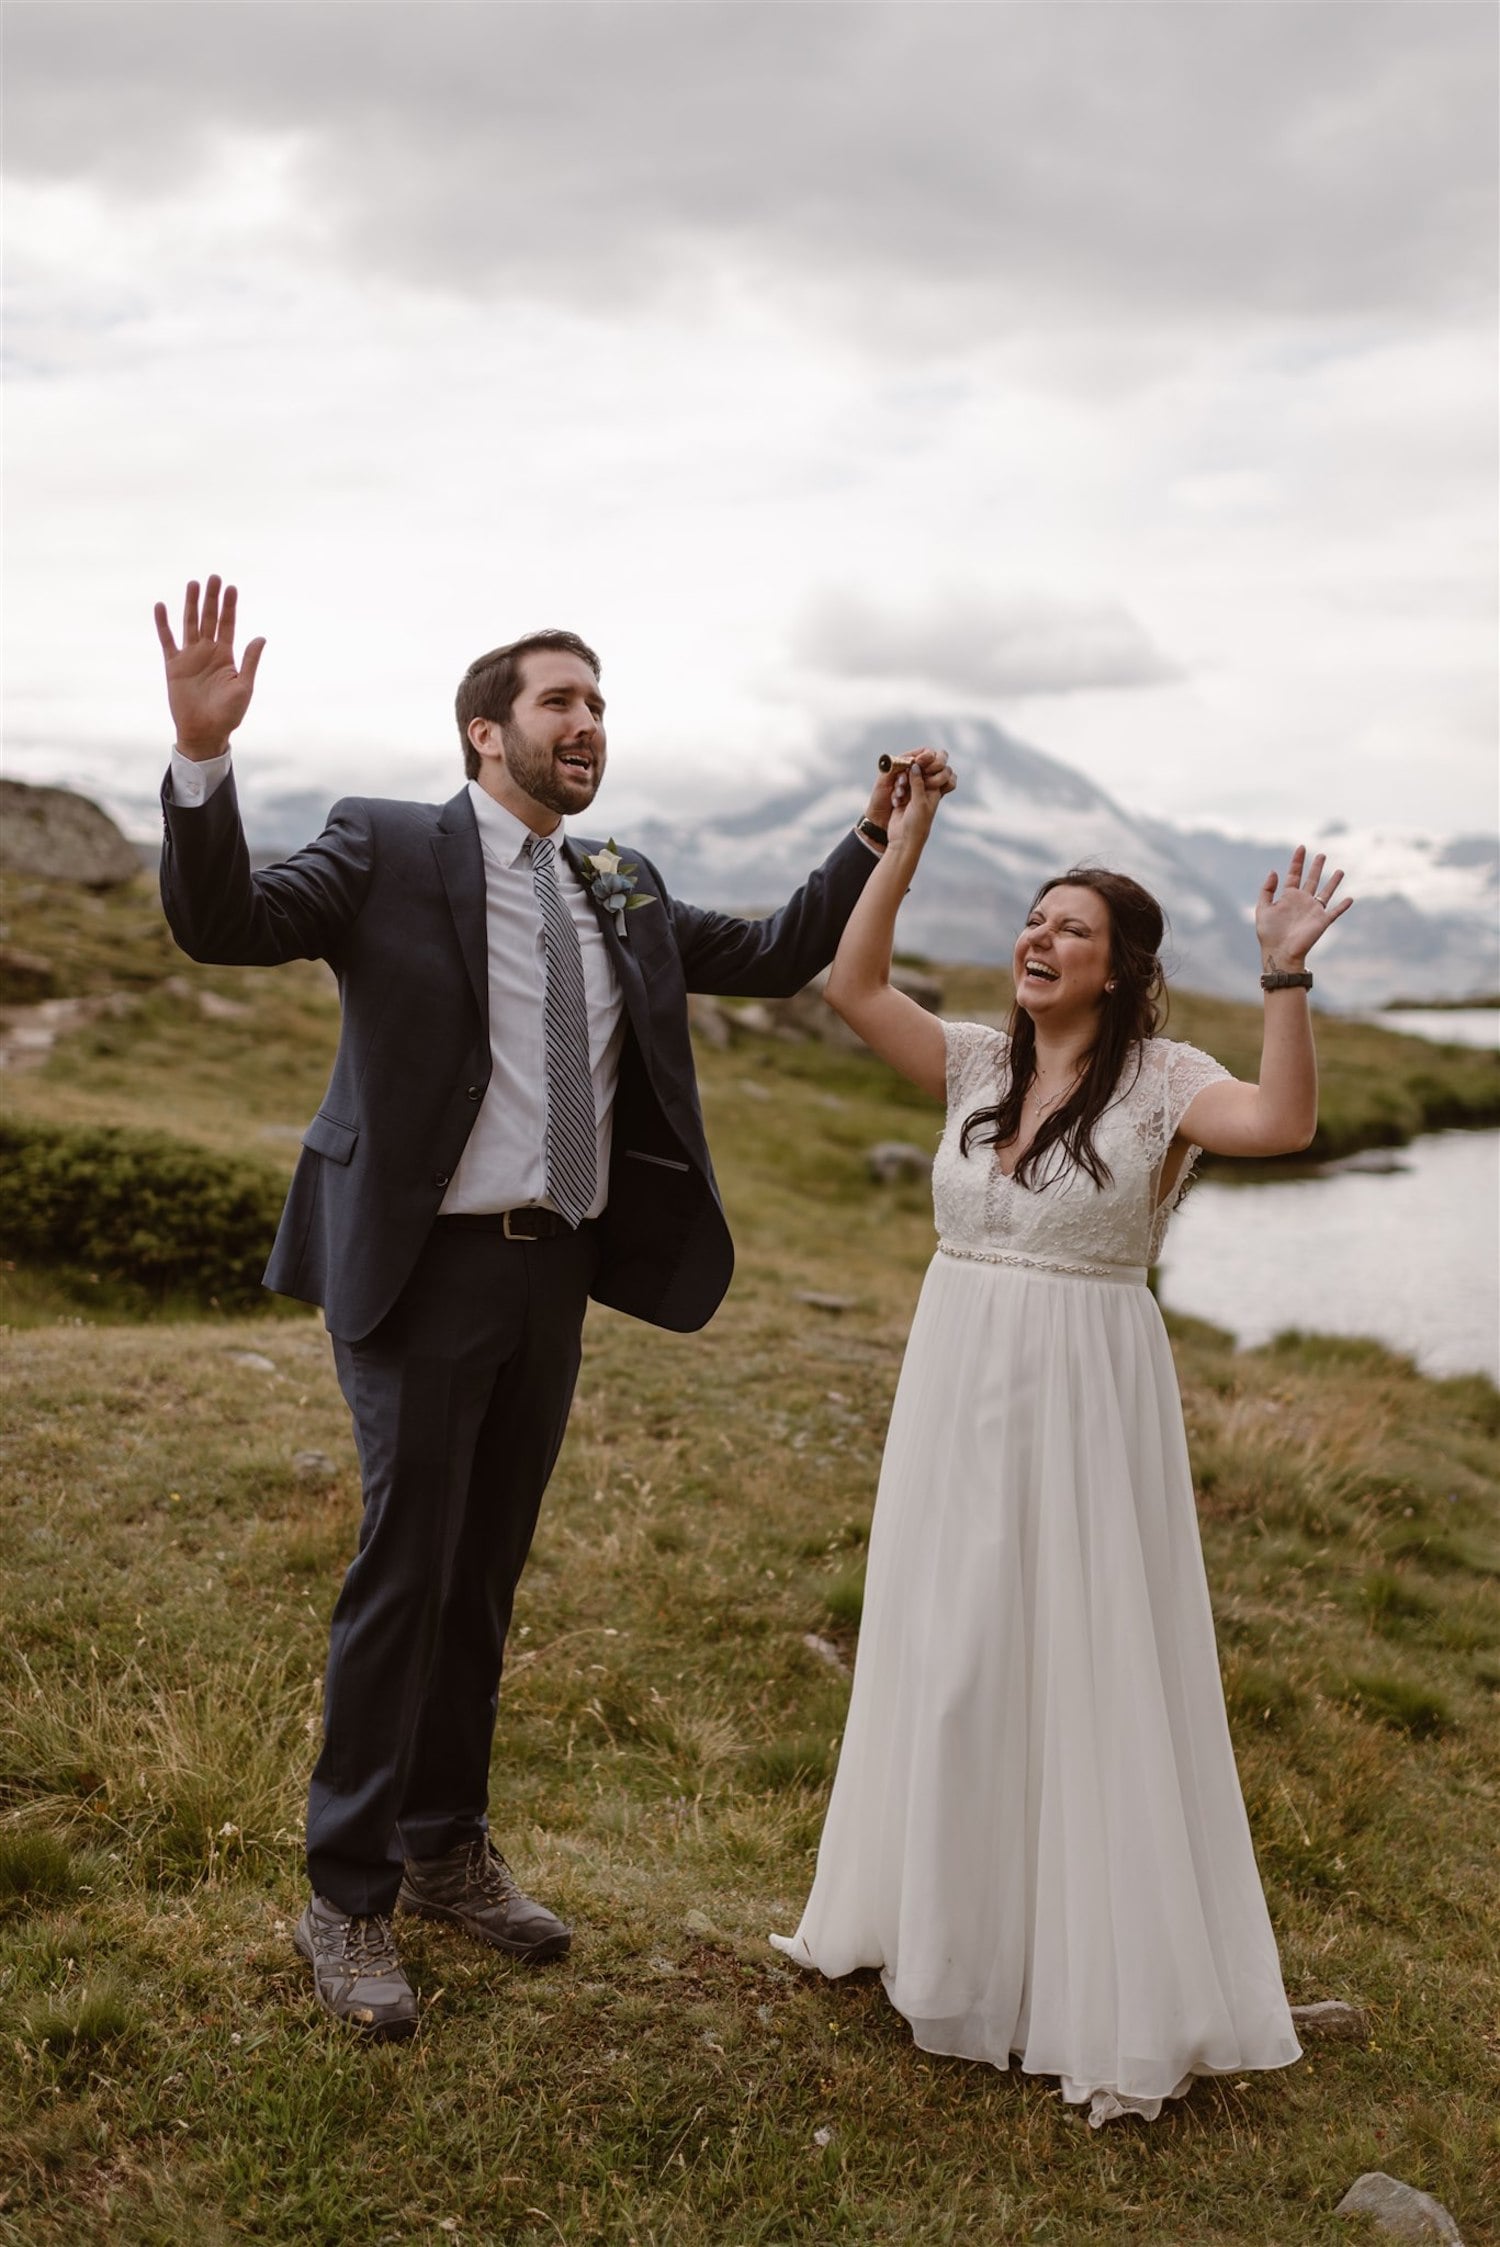 Happy couple after their marriage ceremony in Zermatt